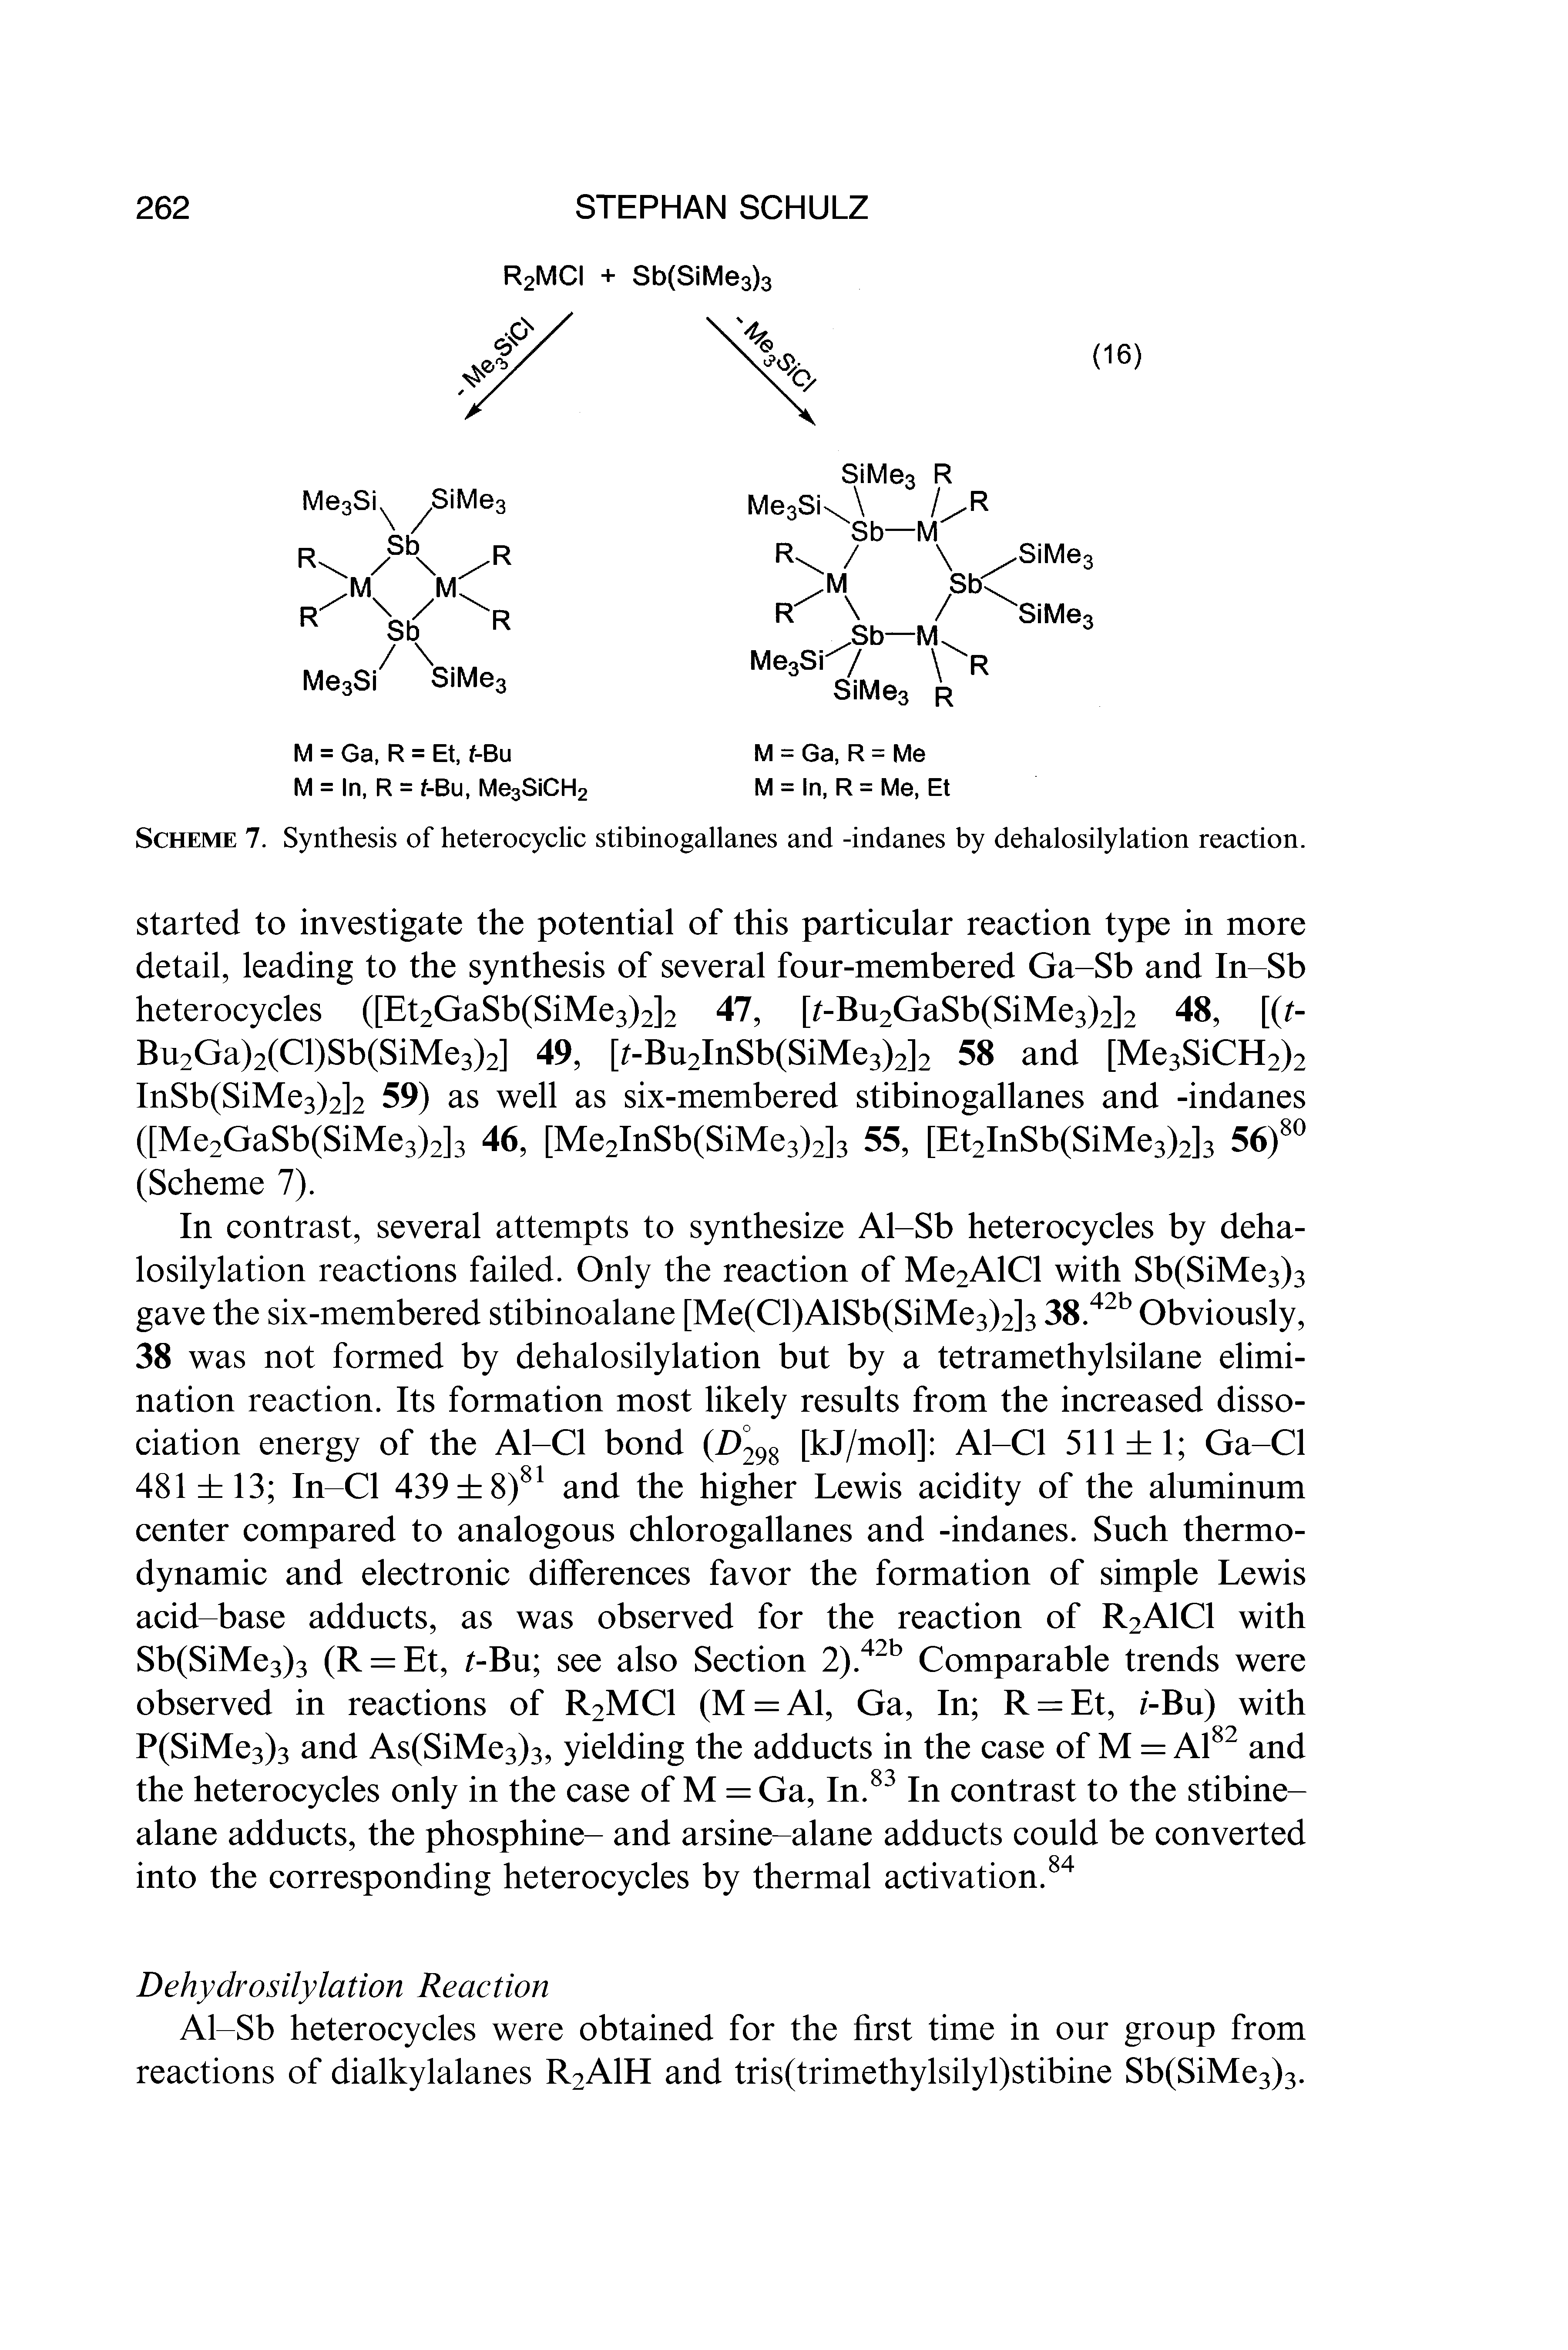 Scheme 7. Synthesis of heterocyclic stibinogallanes and -indanes by dehalosilylation reaction.